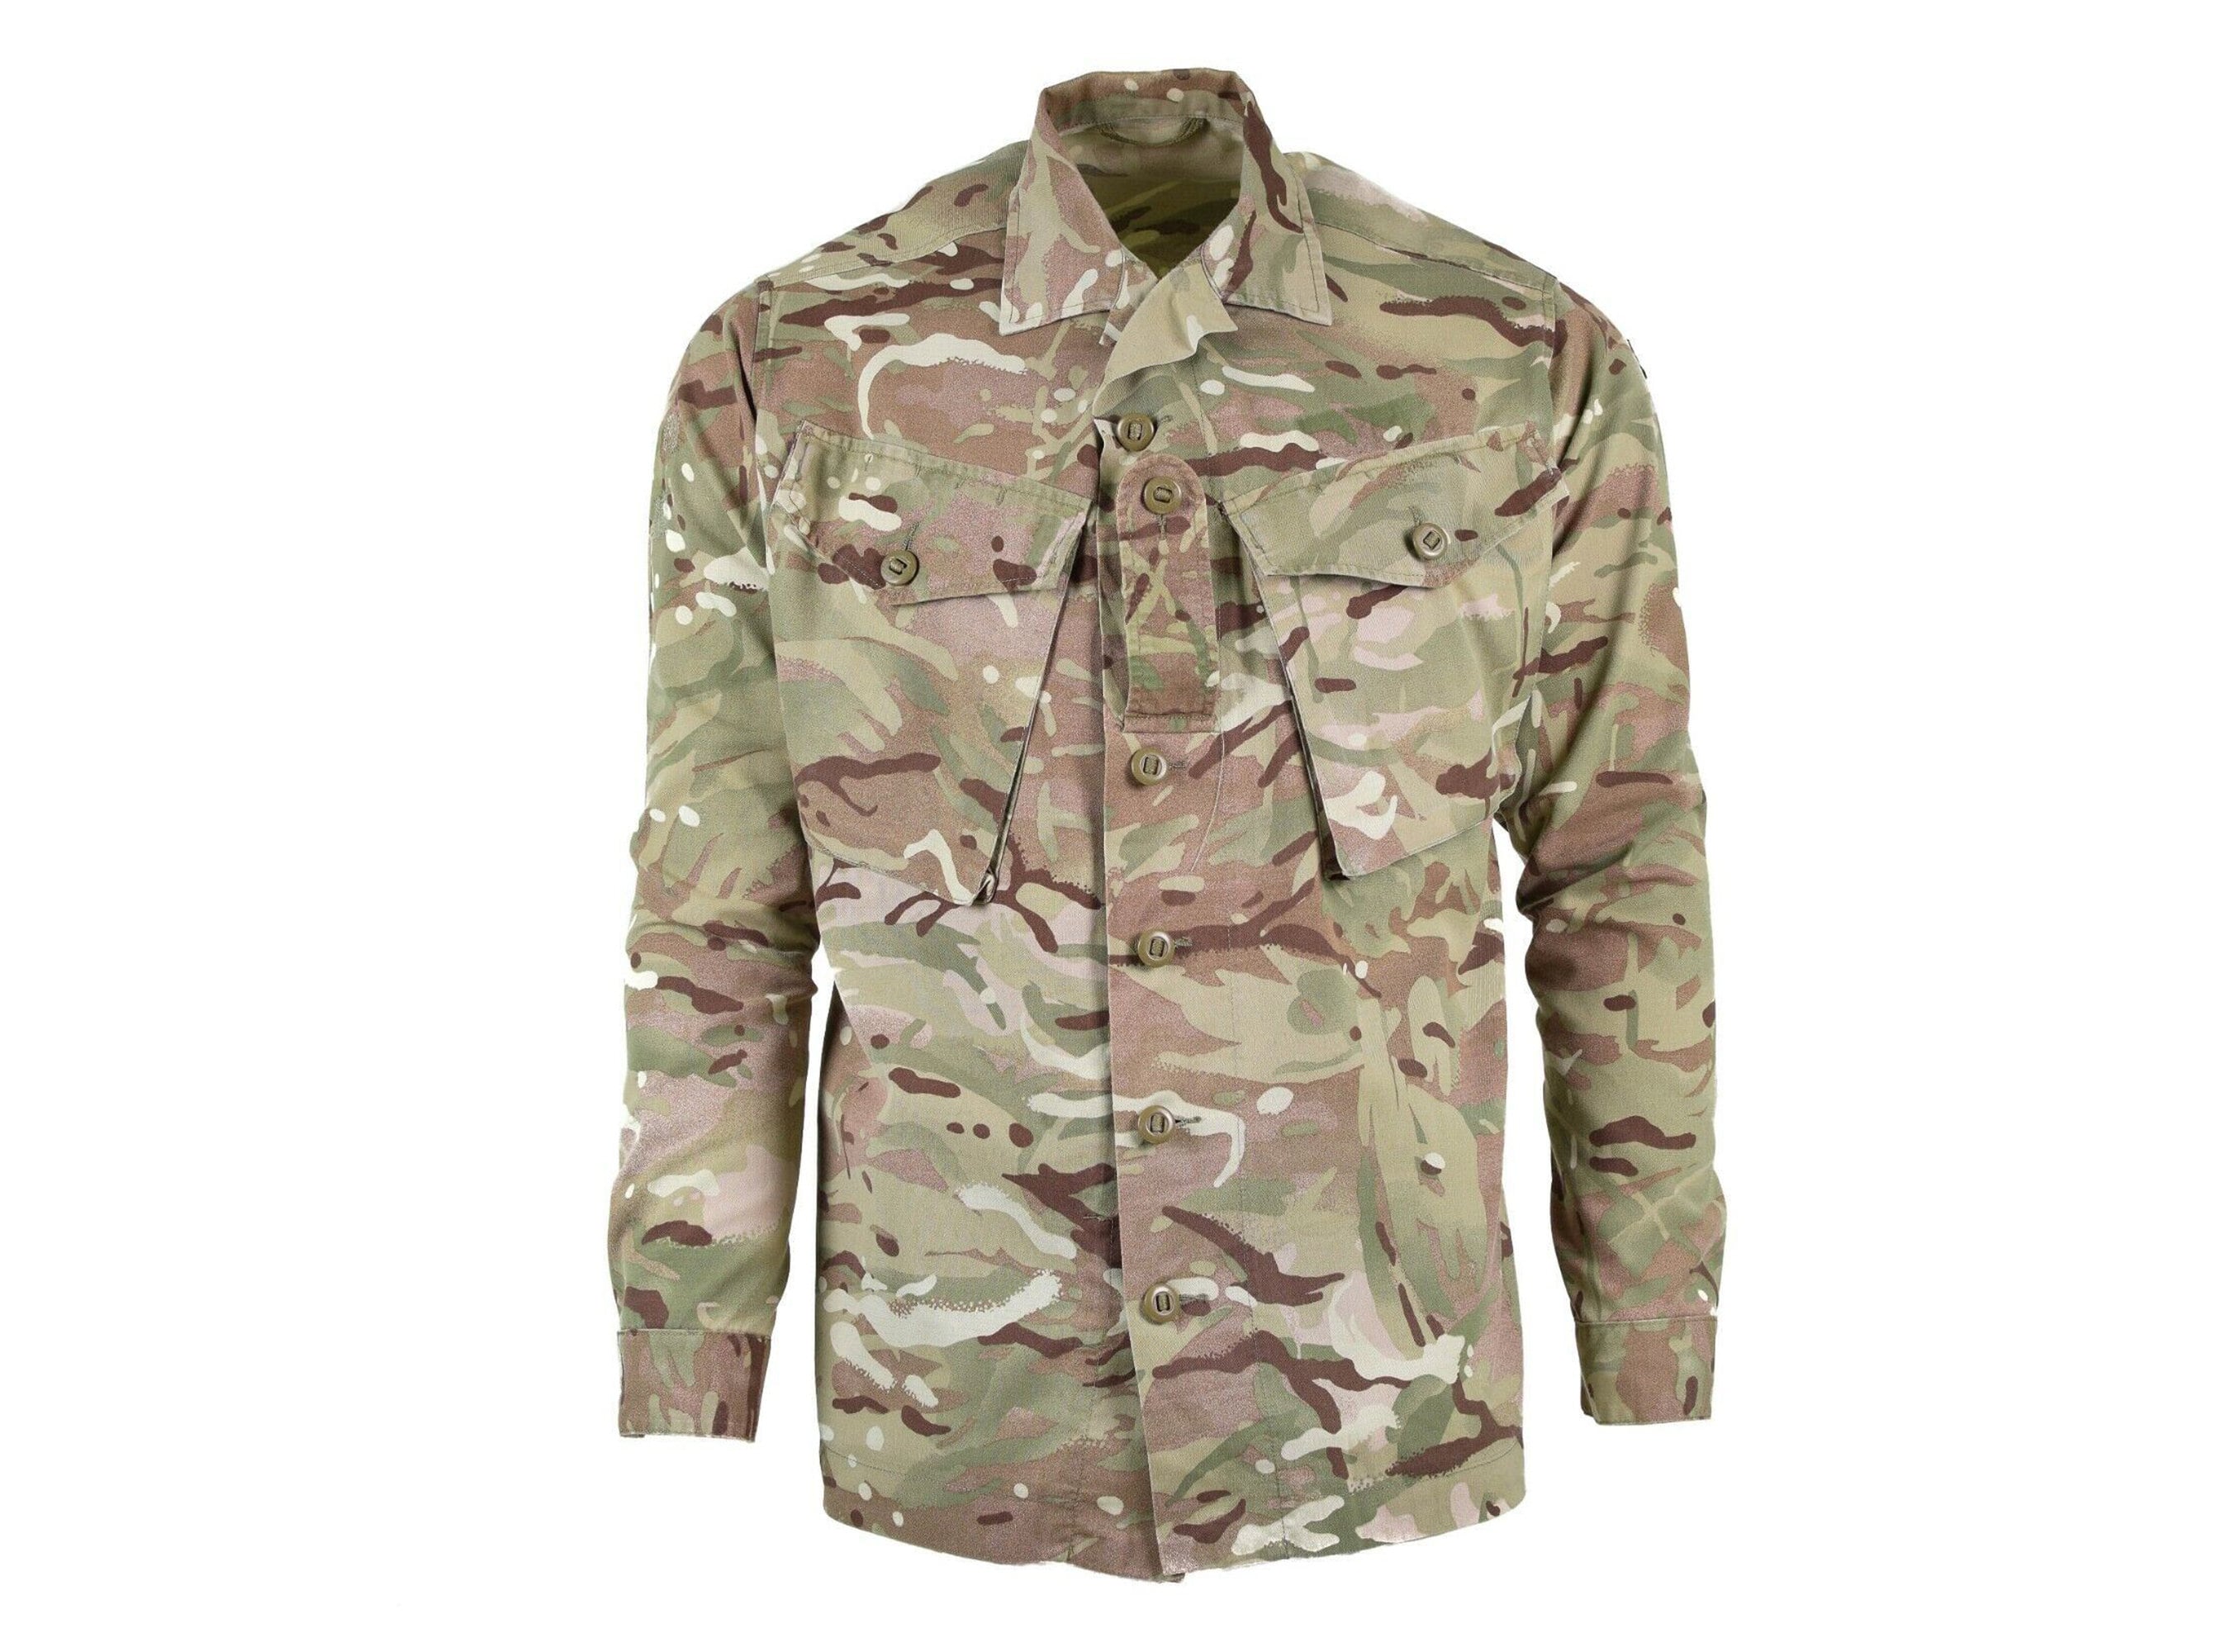 Army Jacket Multicam - Etsy